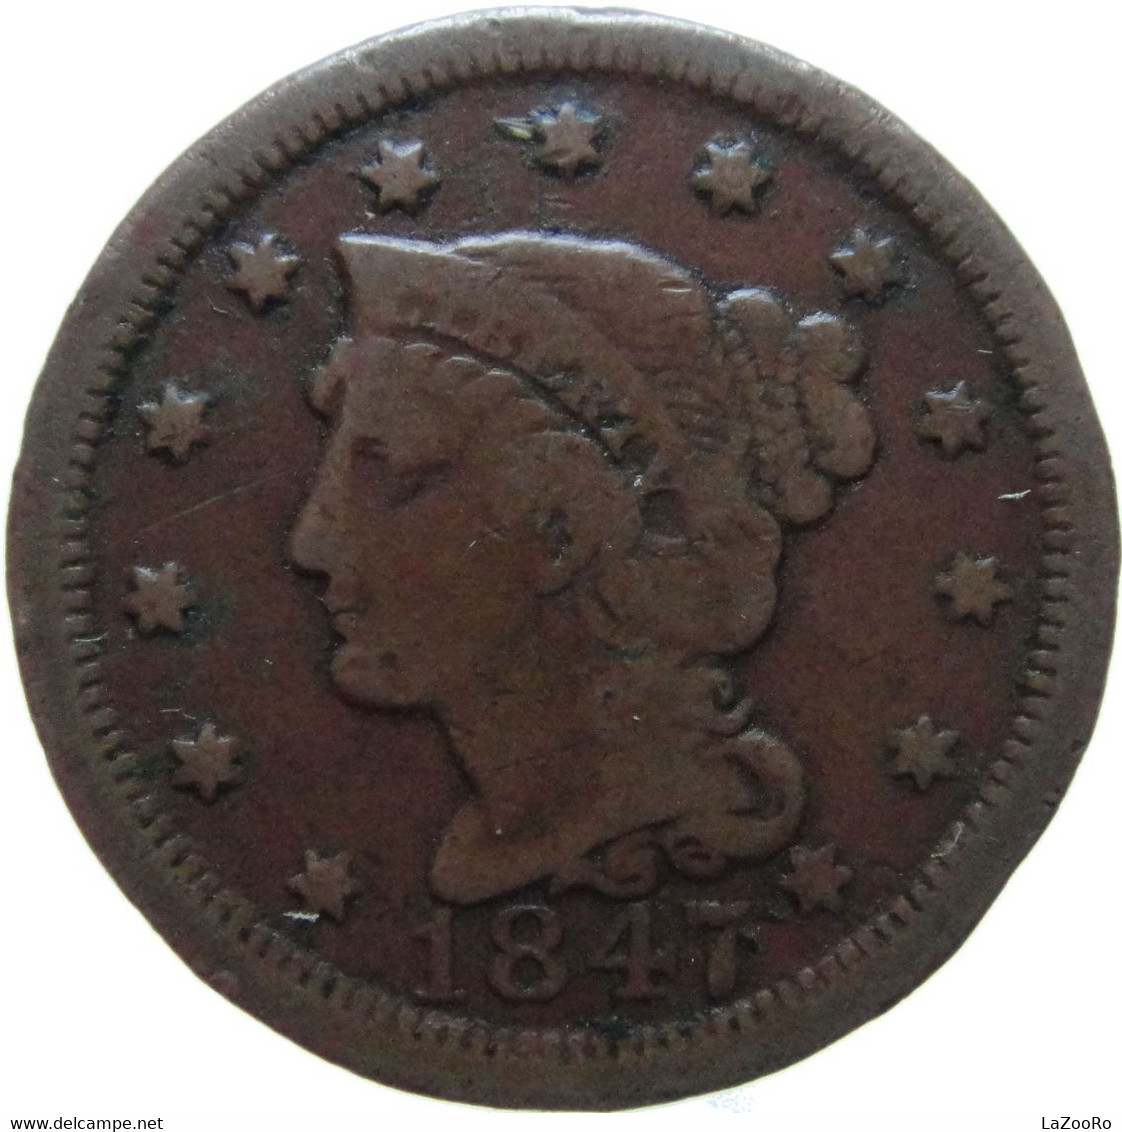 LaZooRo: United States 1 Cent 1847 VF - 1840-1857: Braided Hair